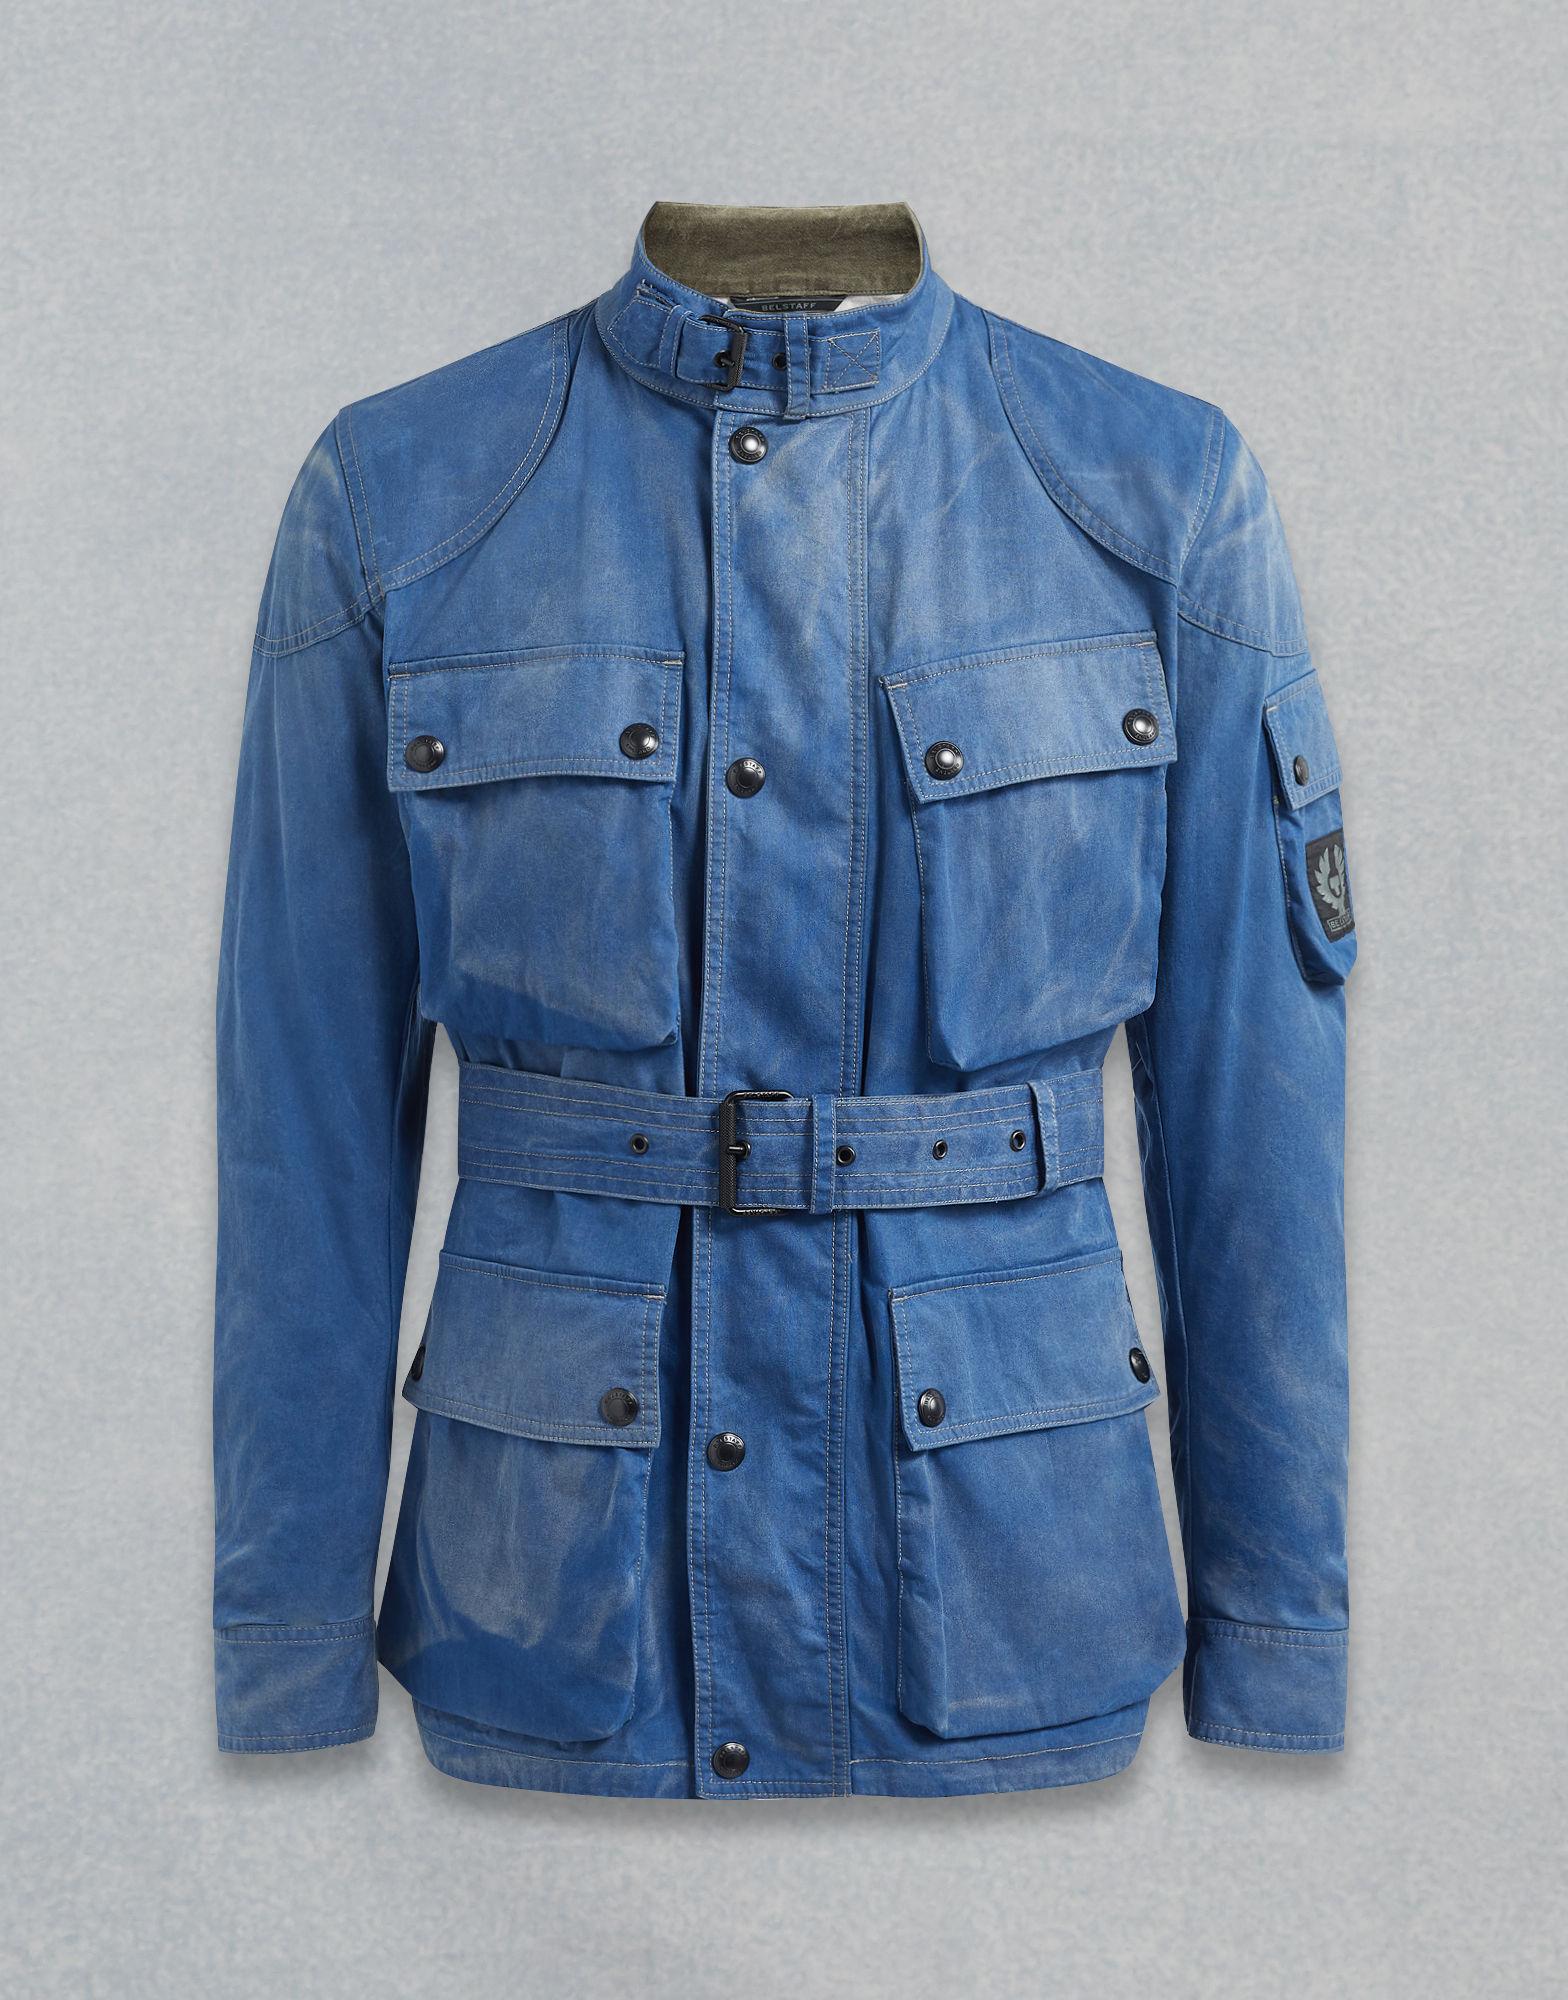 Belstaff Trialmaster Jacket in Blue for Men - Lyst